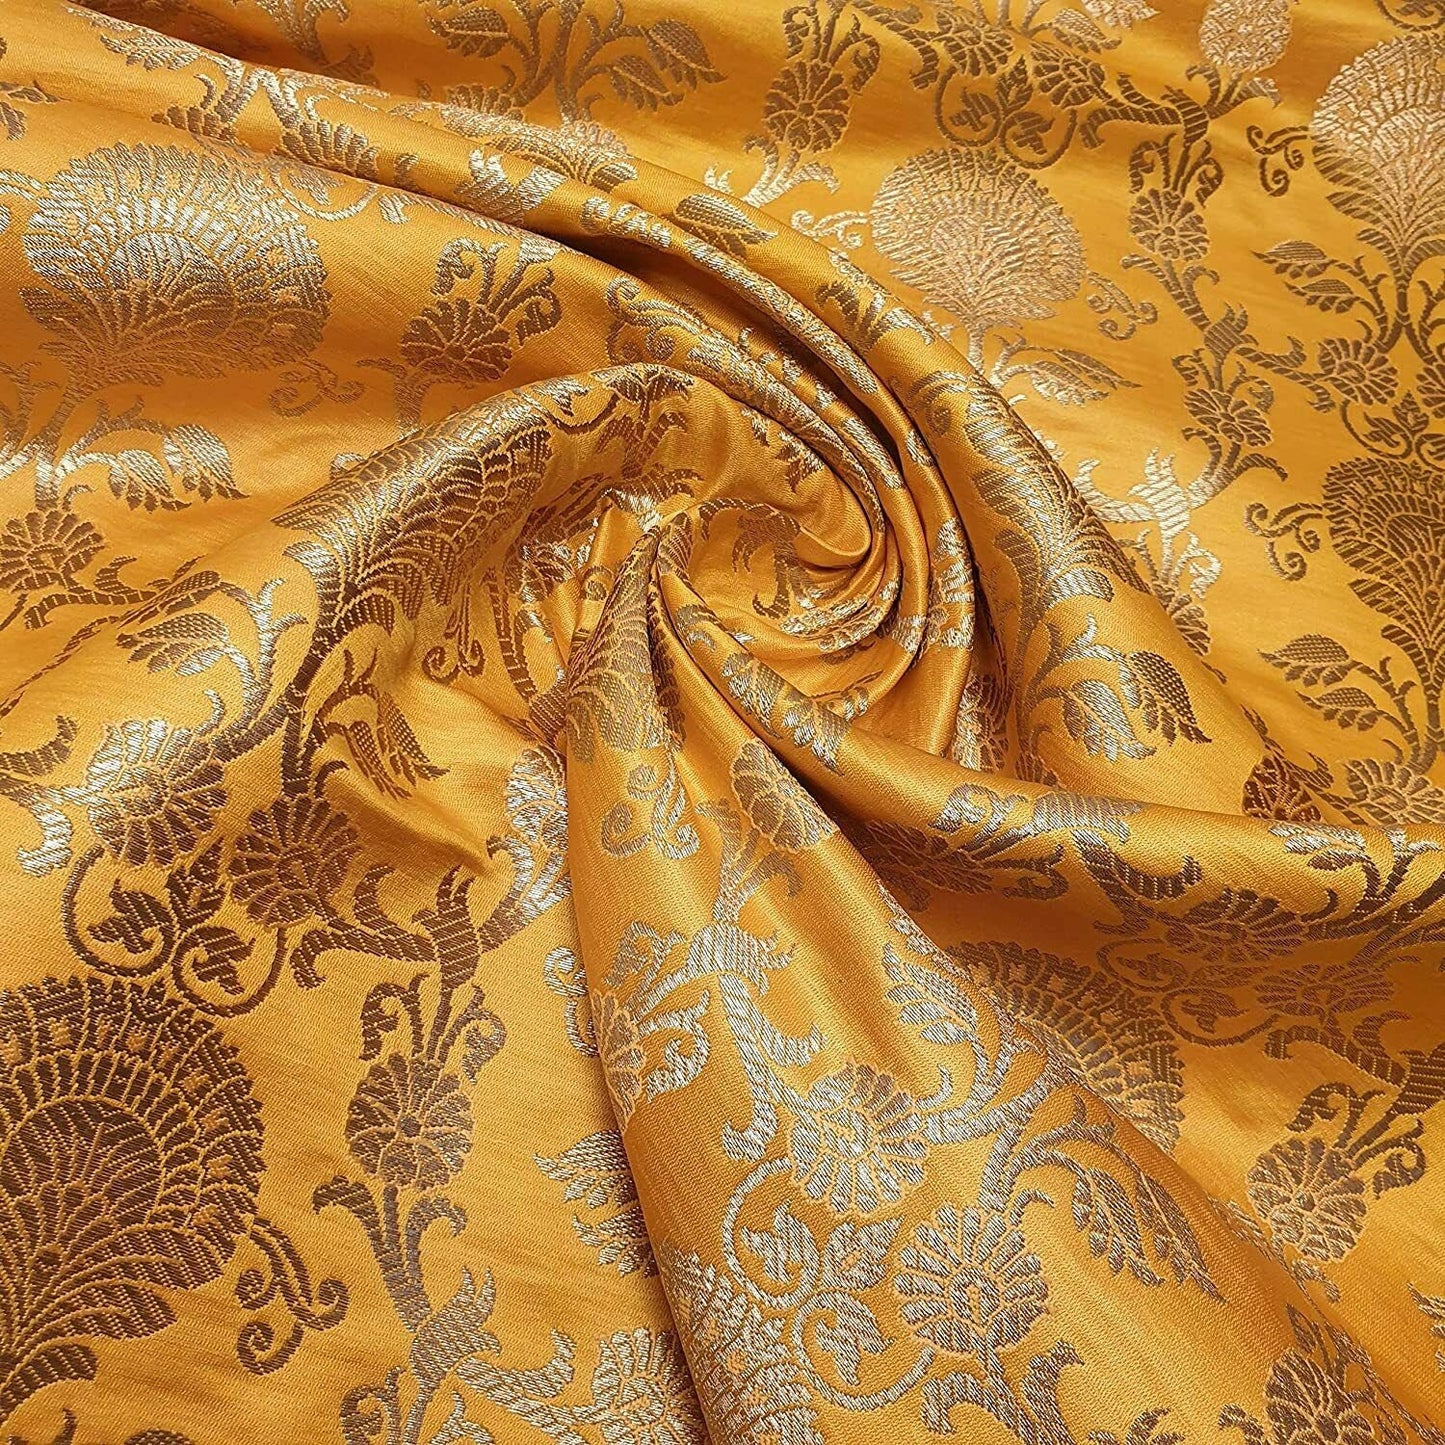 New Prints Ornamental Floral Gold Metallic Print Indian Banarasi Brocade Fabric (Mustard)